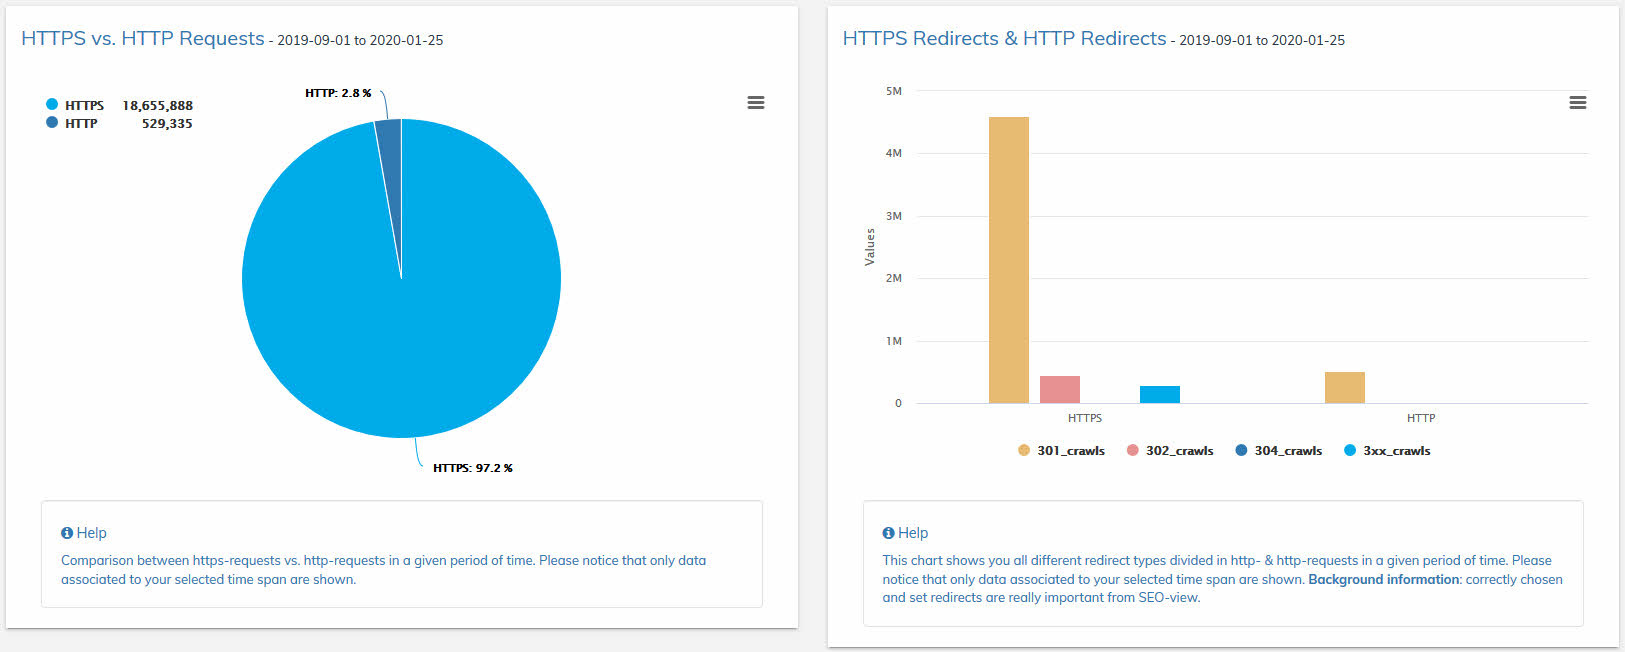 HTTPS & HTTP Crawls inkl. Redirects